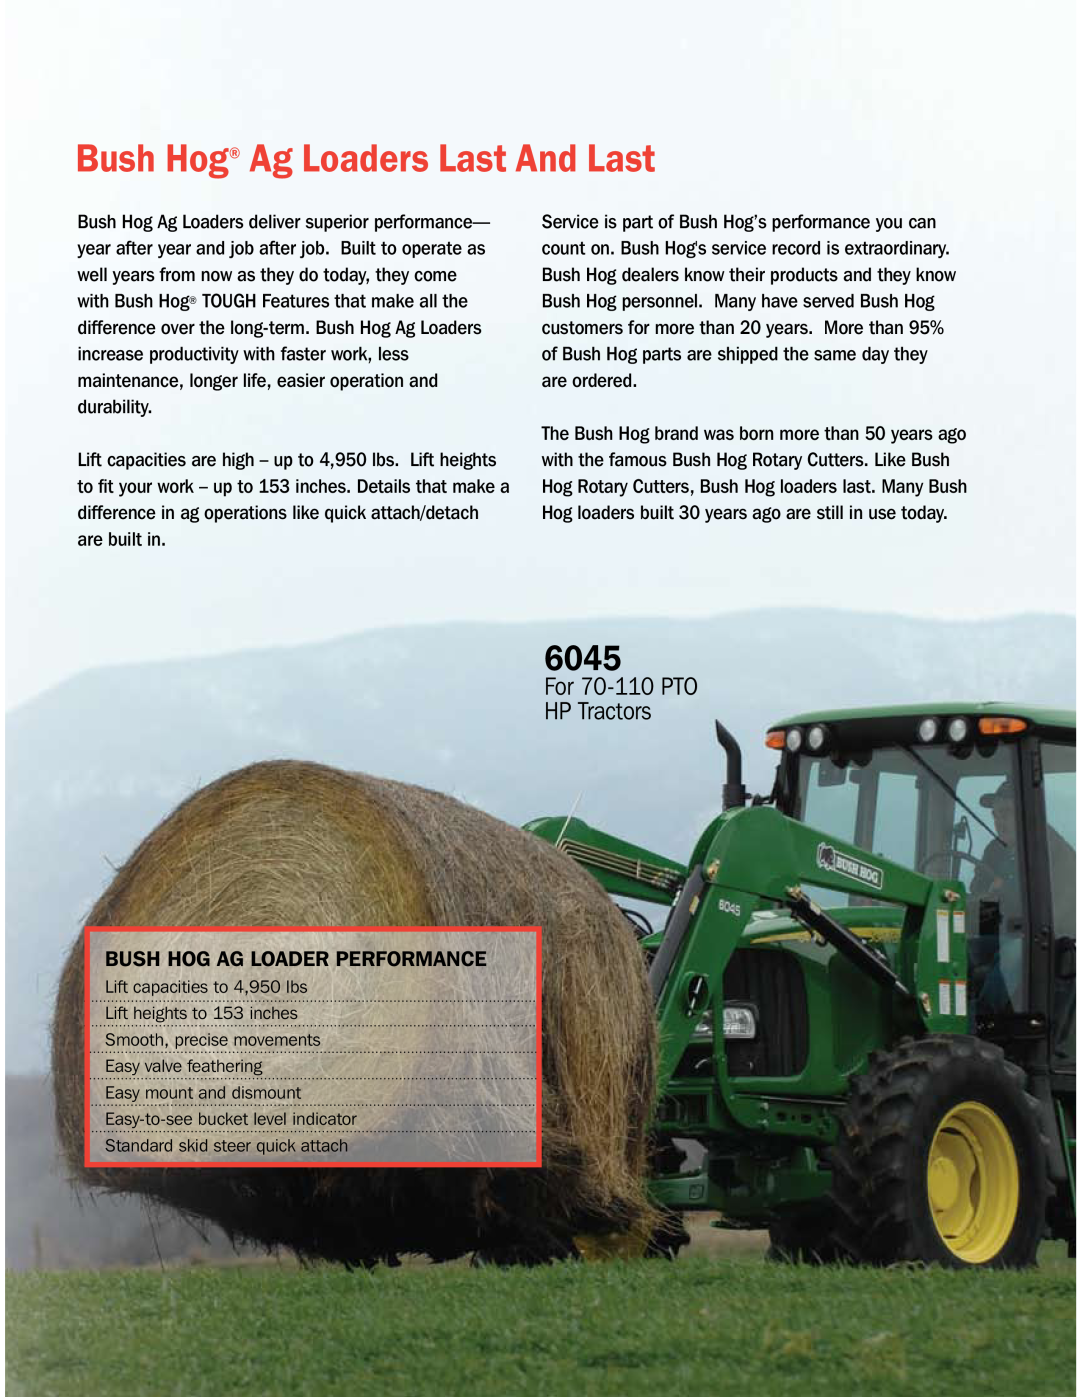 Bush Hog Compact & Ag Loaders manual 6045, For 70-110PTO HP Tractors, Bush Hog Ag Loader Performance 